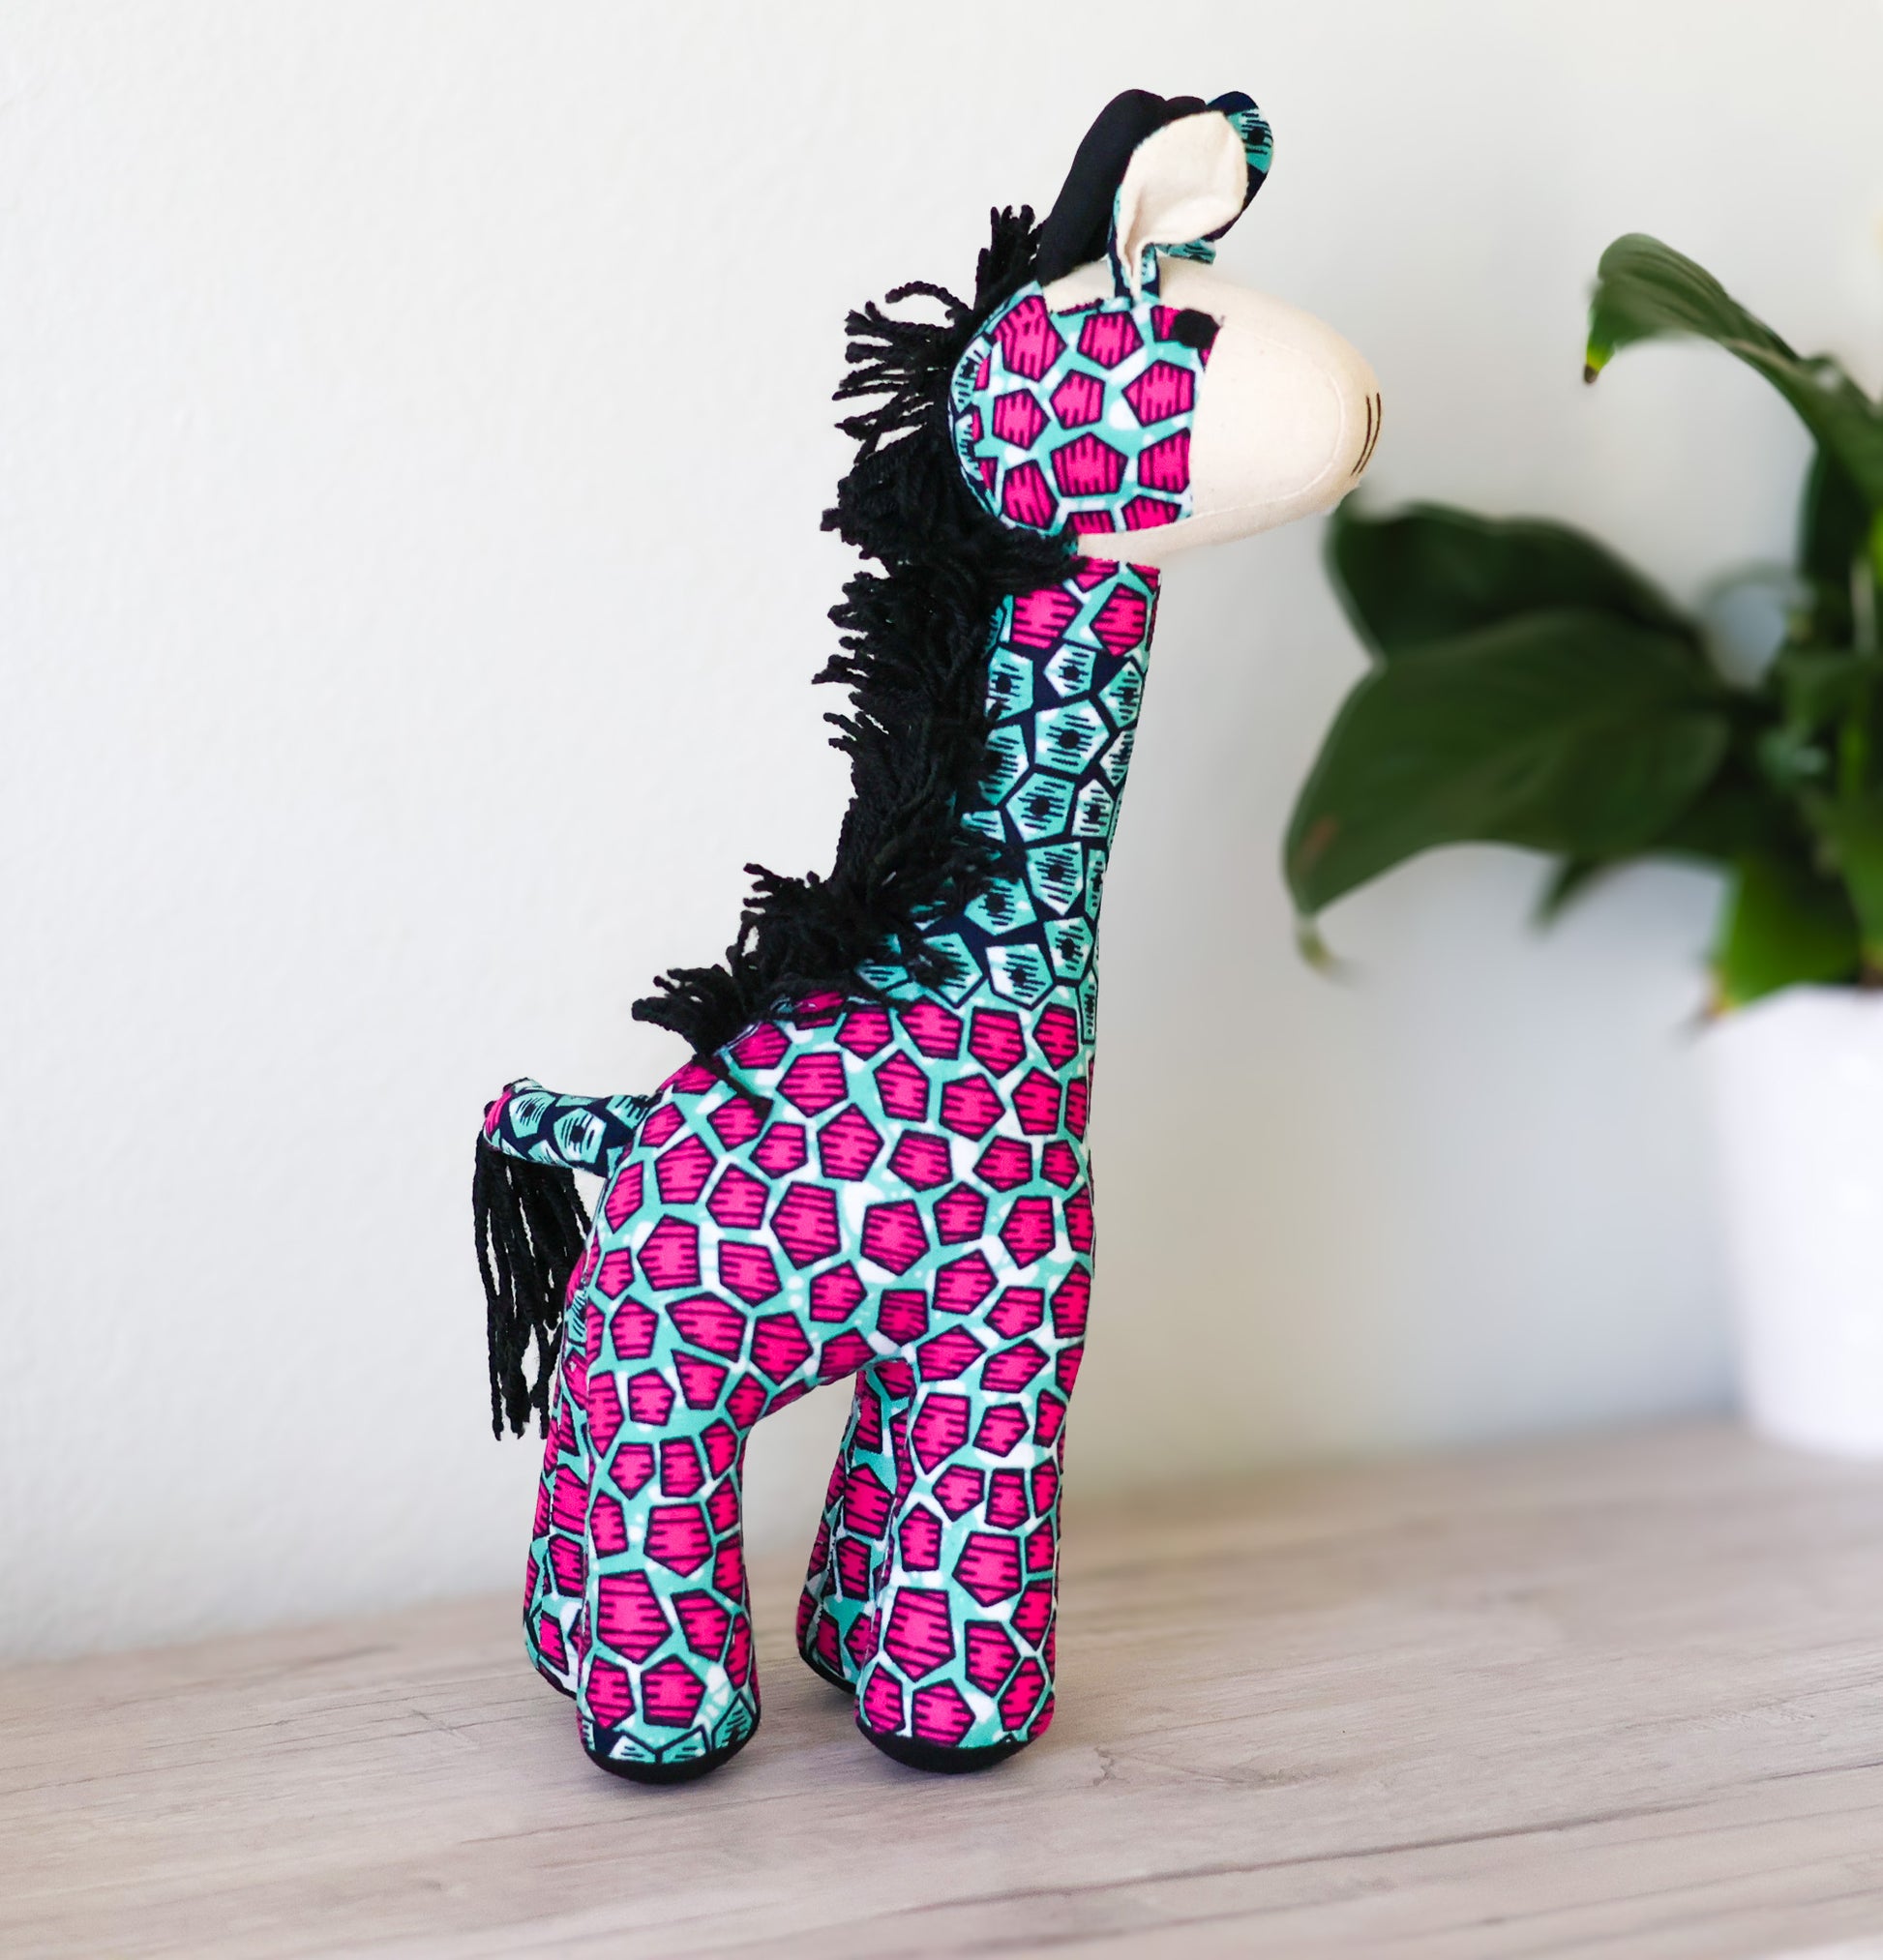 Giraffe Soft Toy - Big Pink - NDINI ACCESSORIES